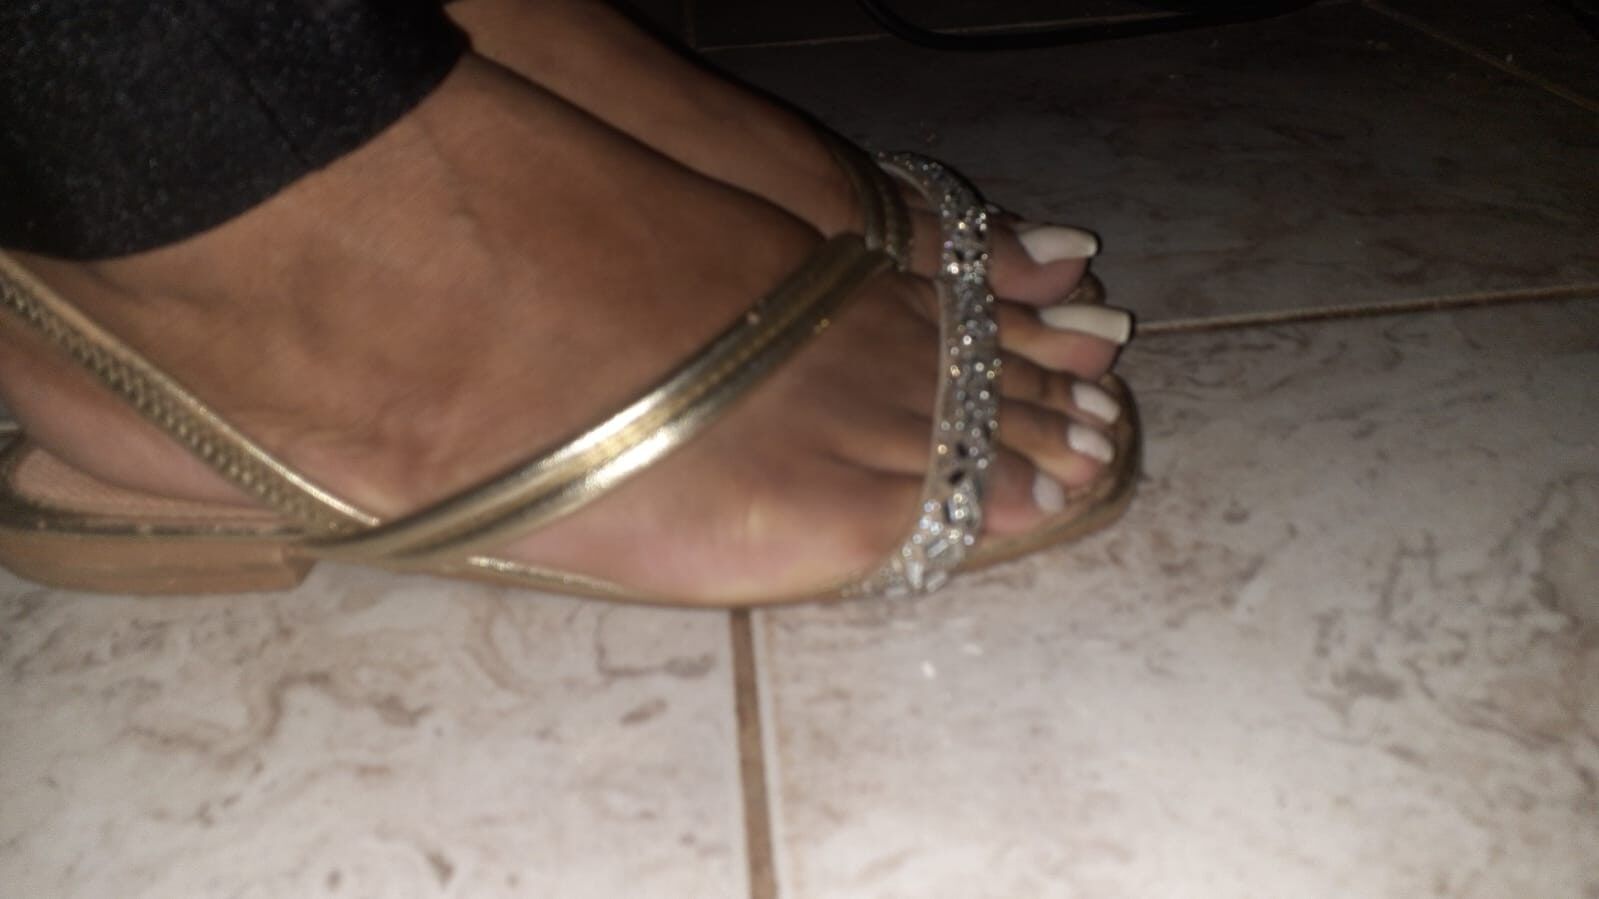 My feet #7